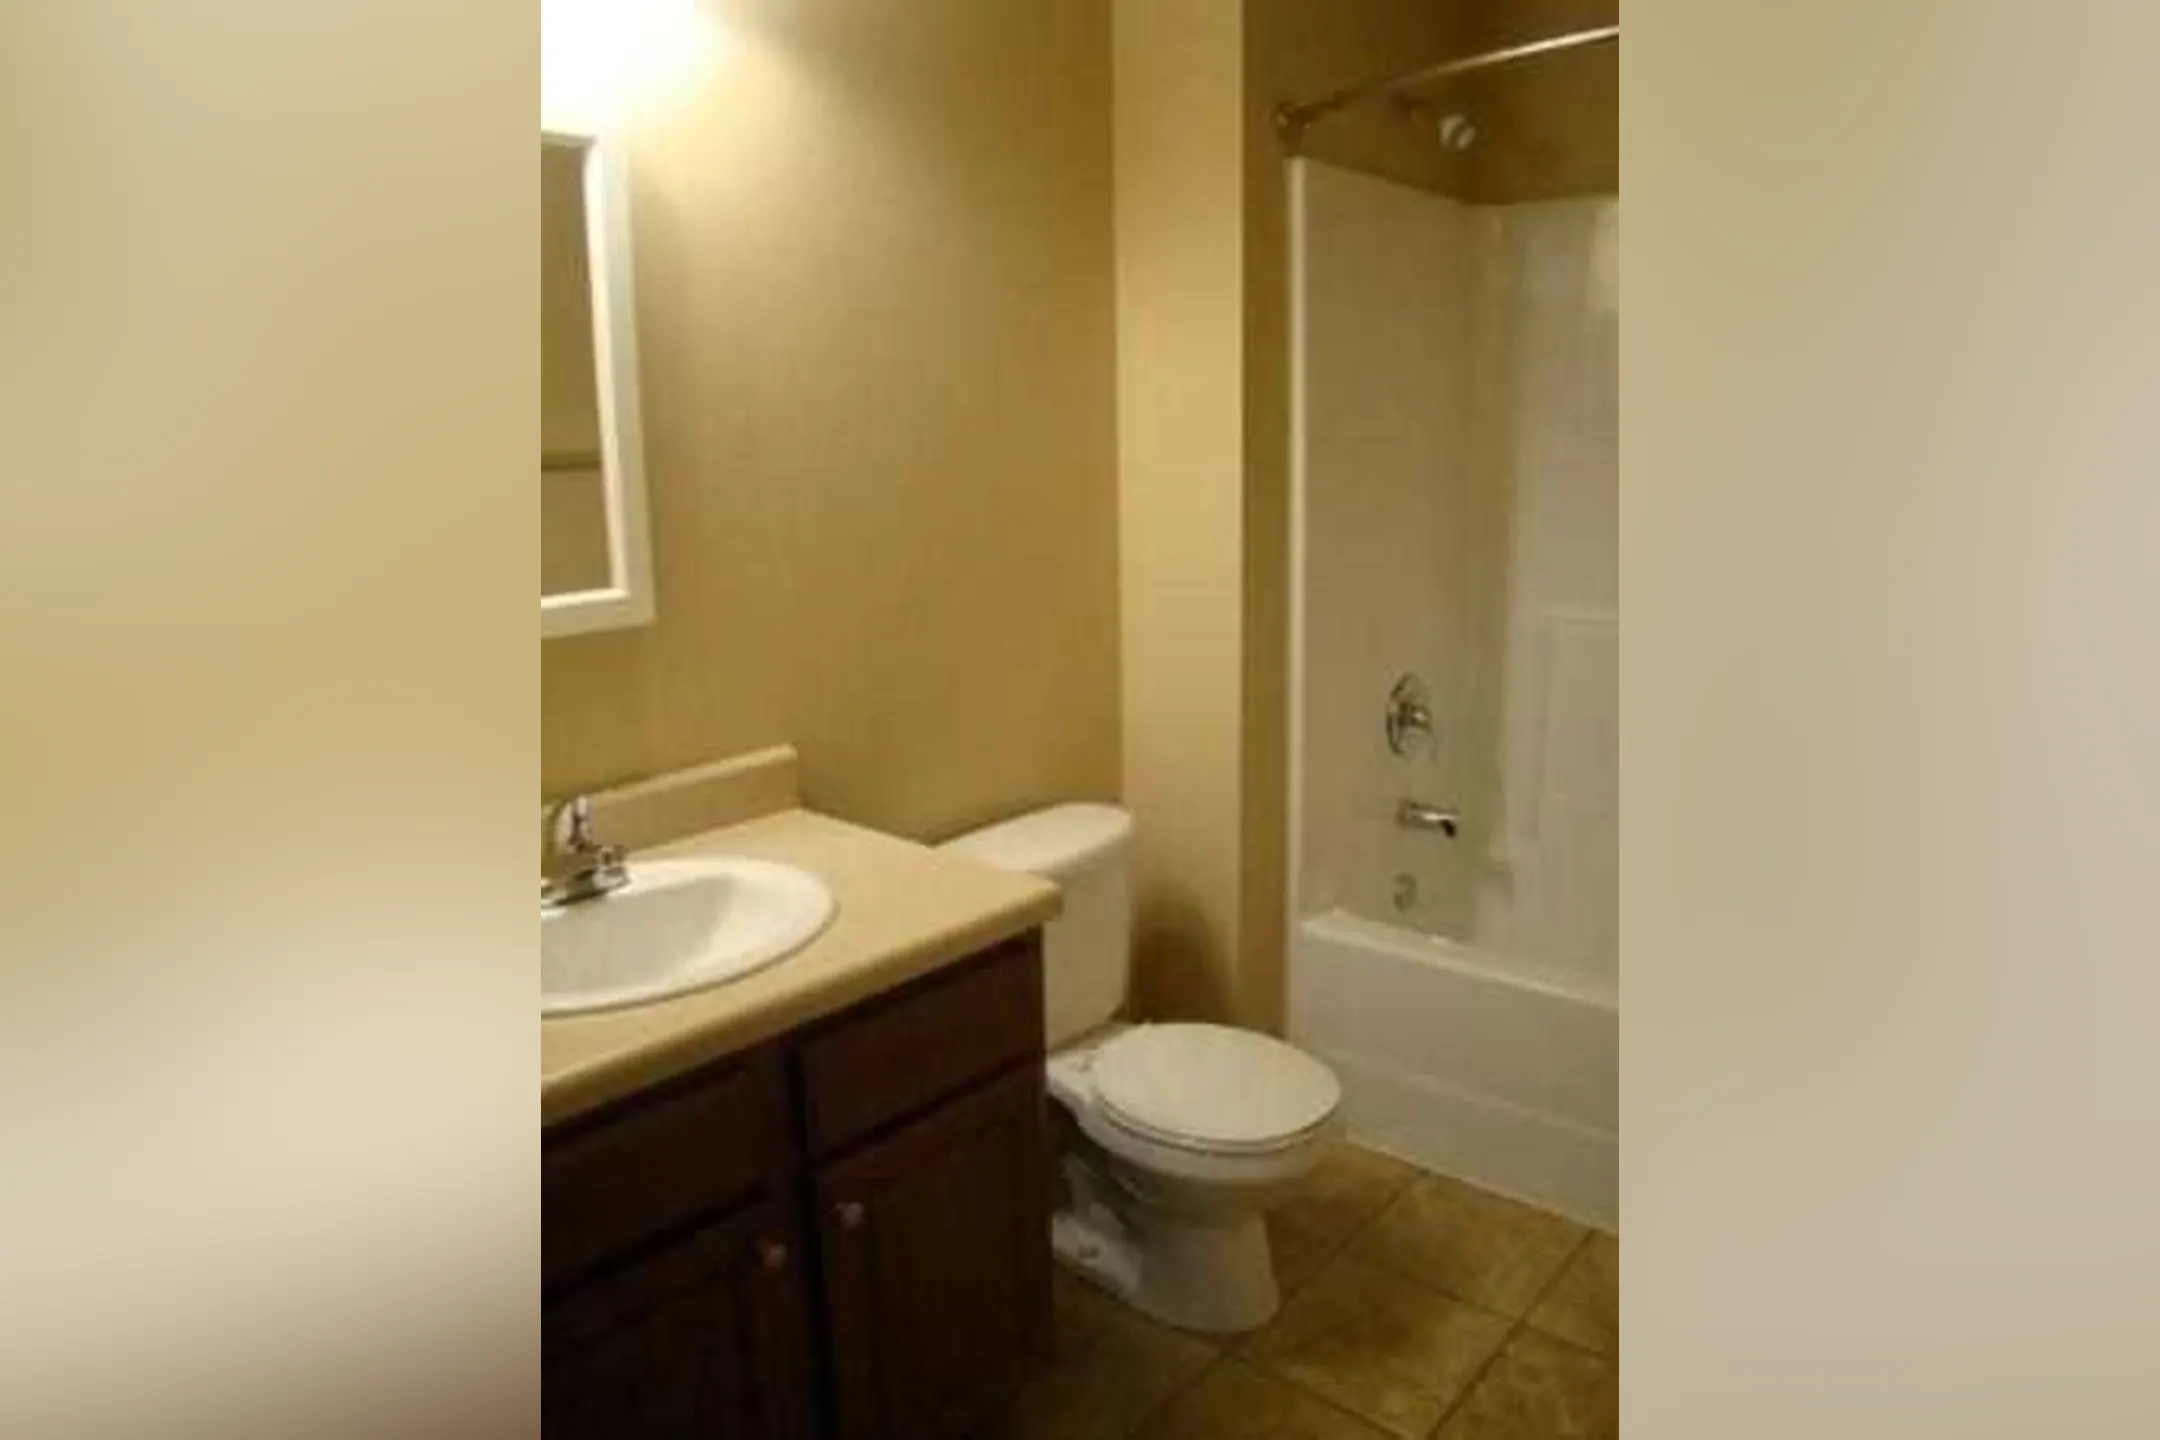 Bathroom - Mirada Manor Apartments - Sioux Falls, SD